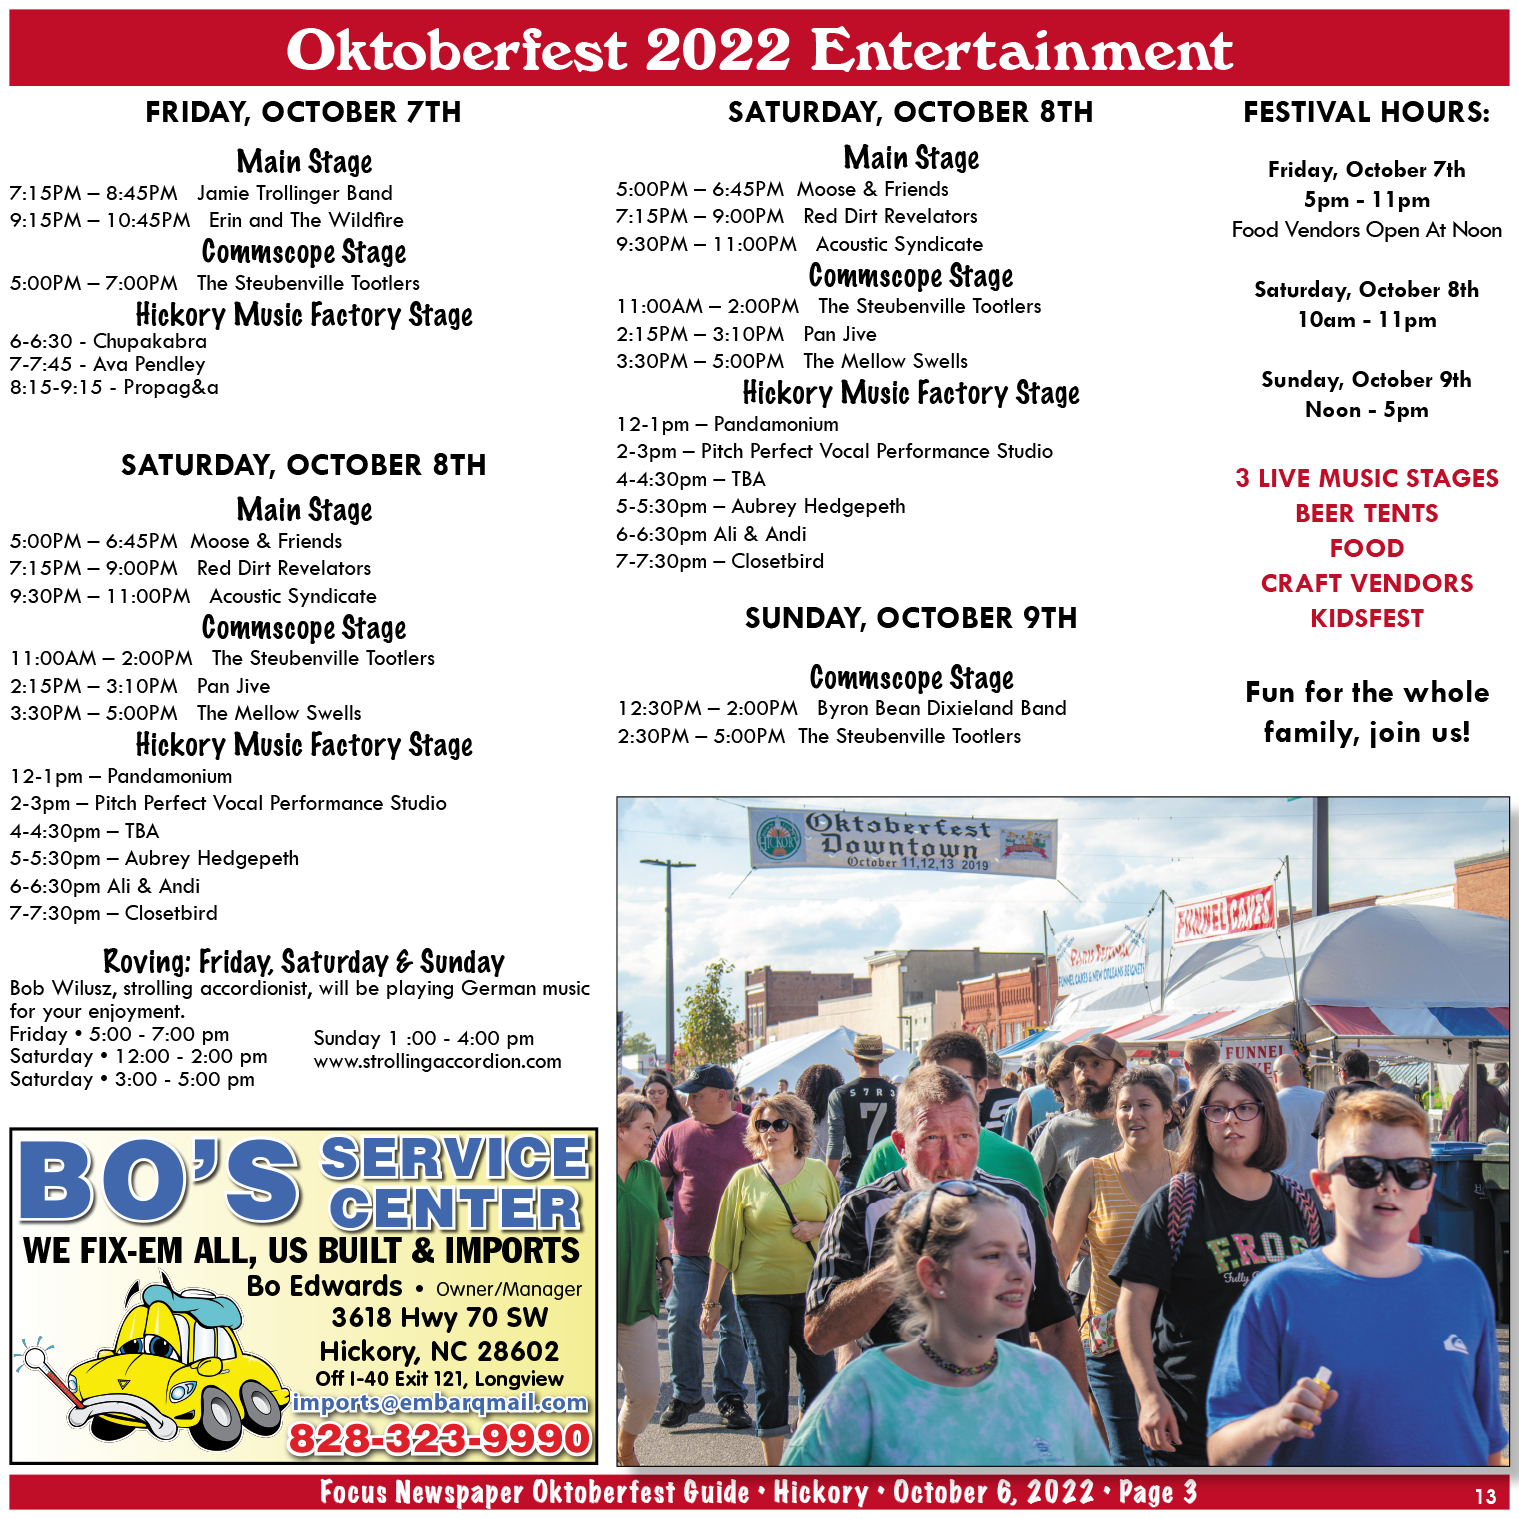 Hickory's Oktoberfest Focus Newspaper